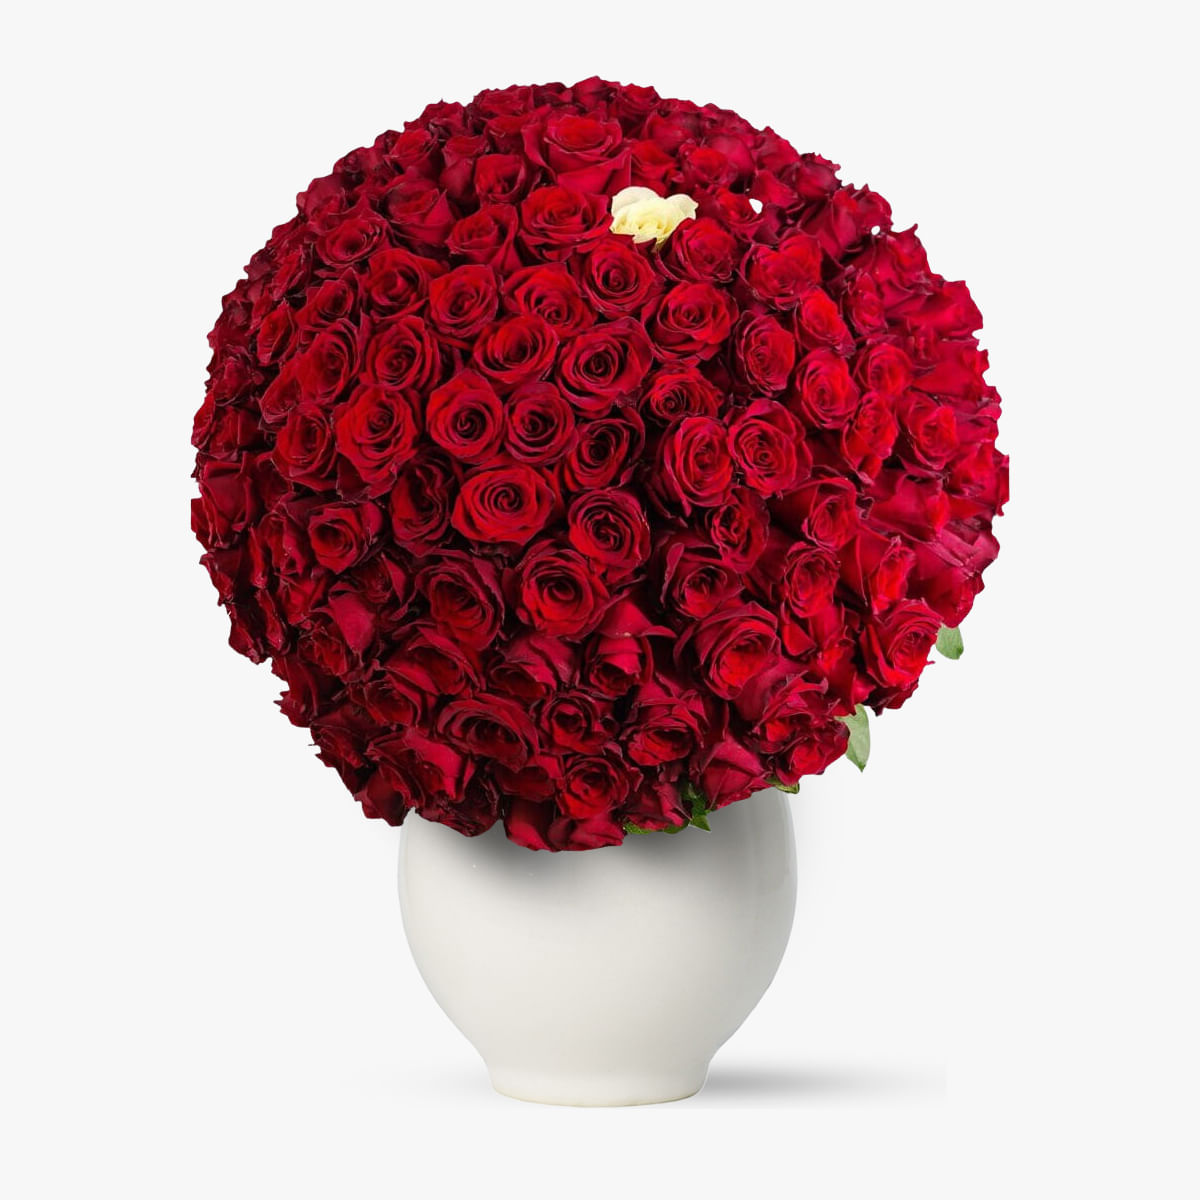 Buchet 229 trandafiri rosii – Dragoste fara limite floria.ro